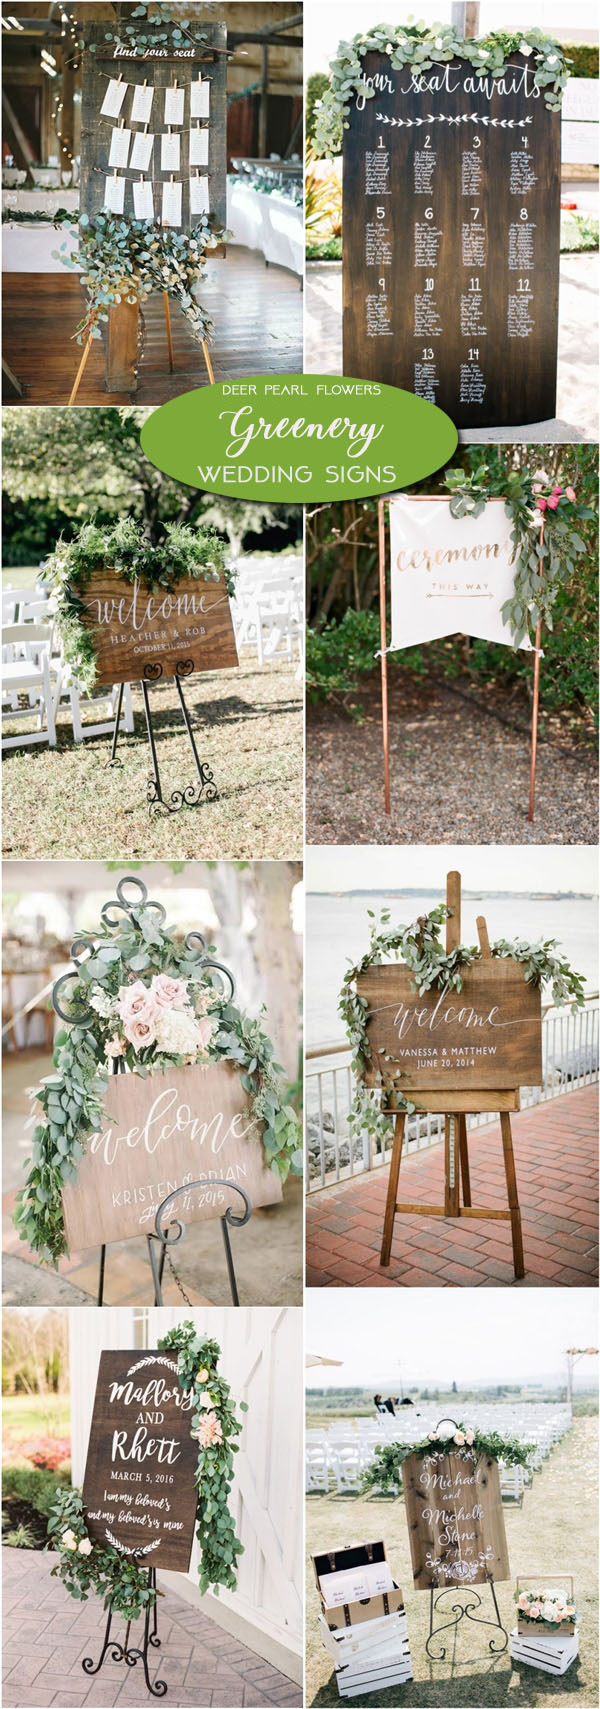 Rustic greenery wedding signs